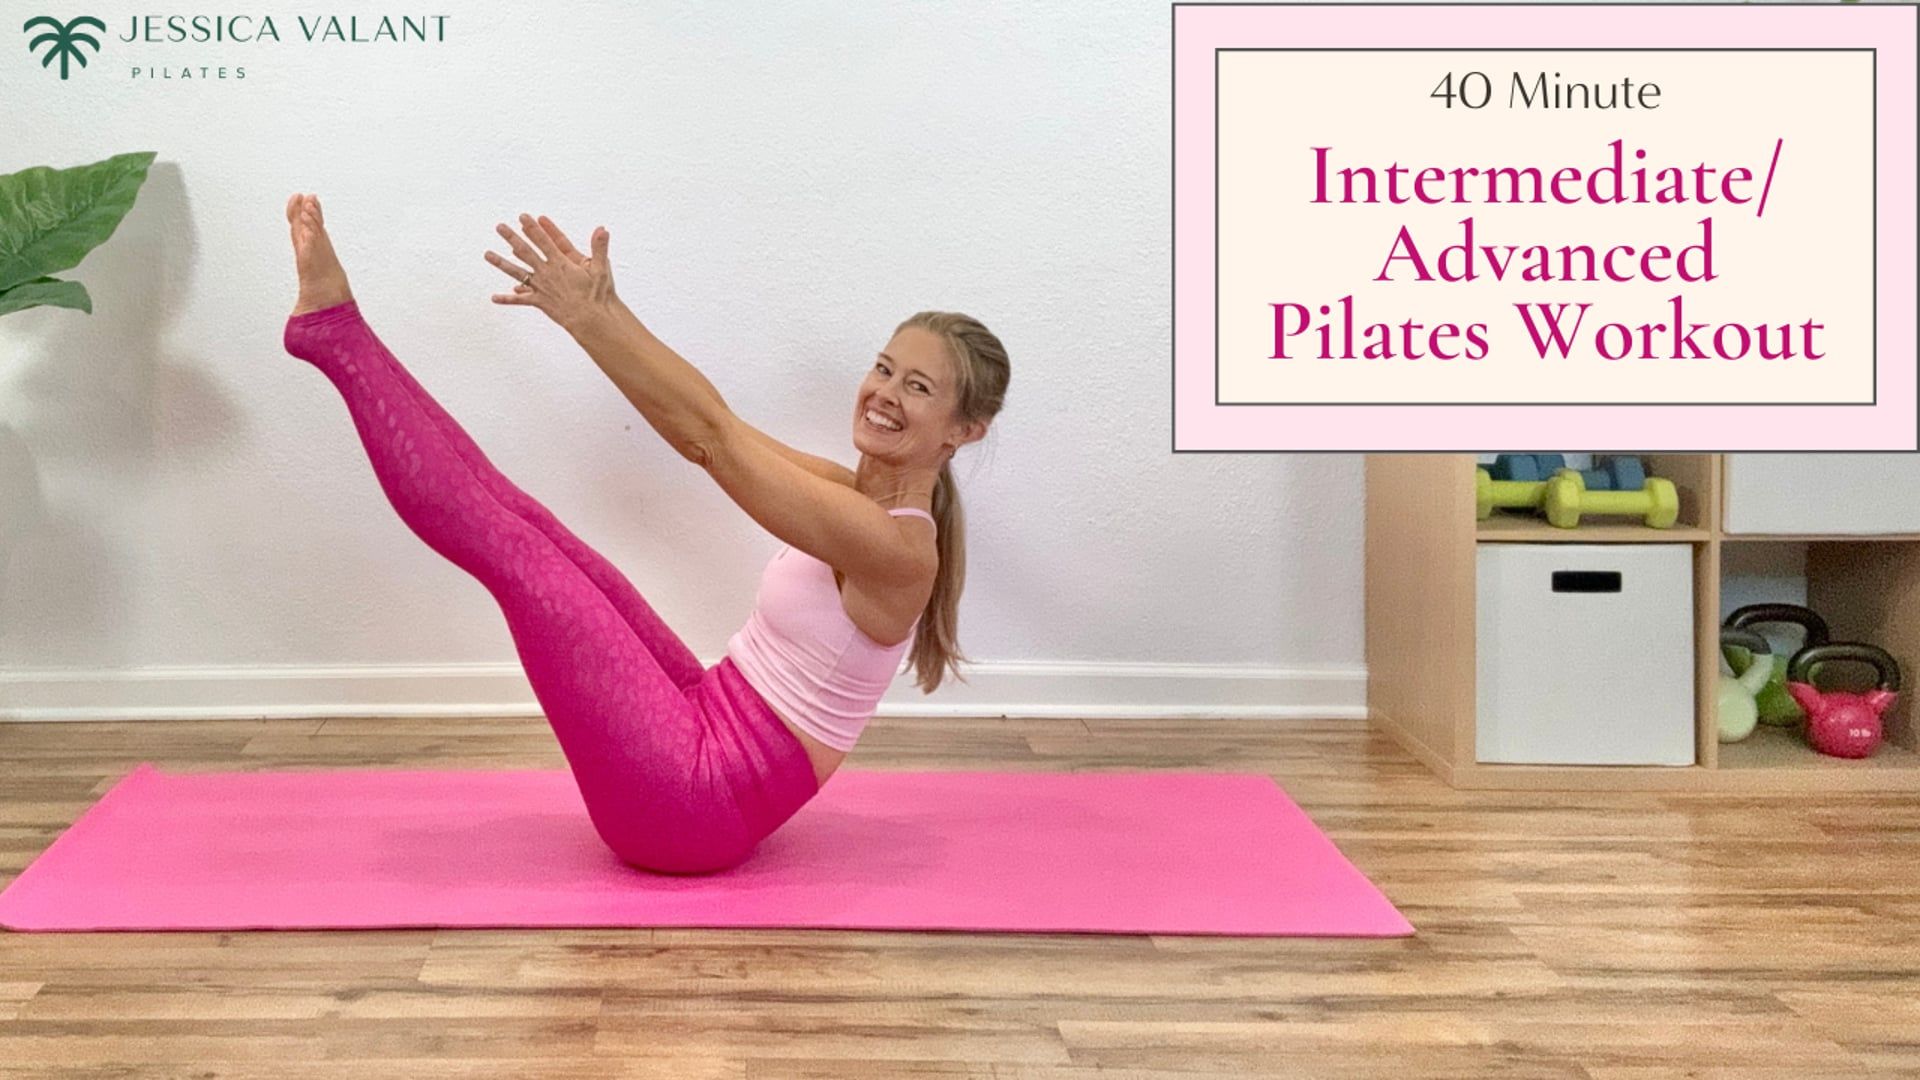 Intermediate/Advanced Pilates Workout - Jessica Valant Pilates